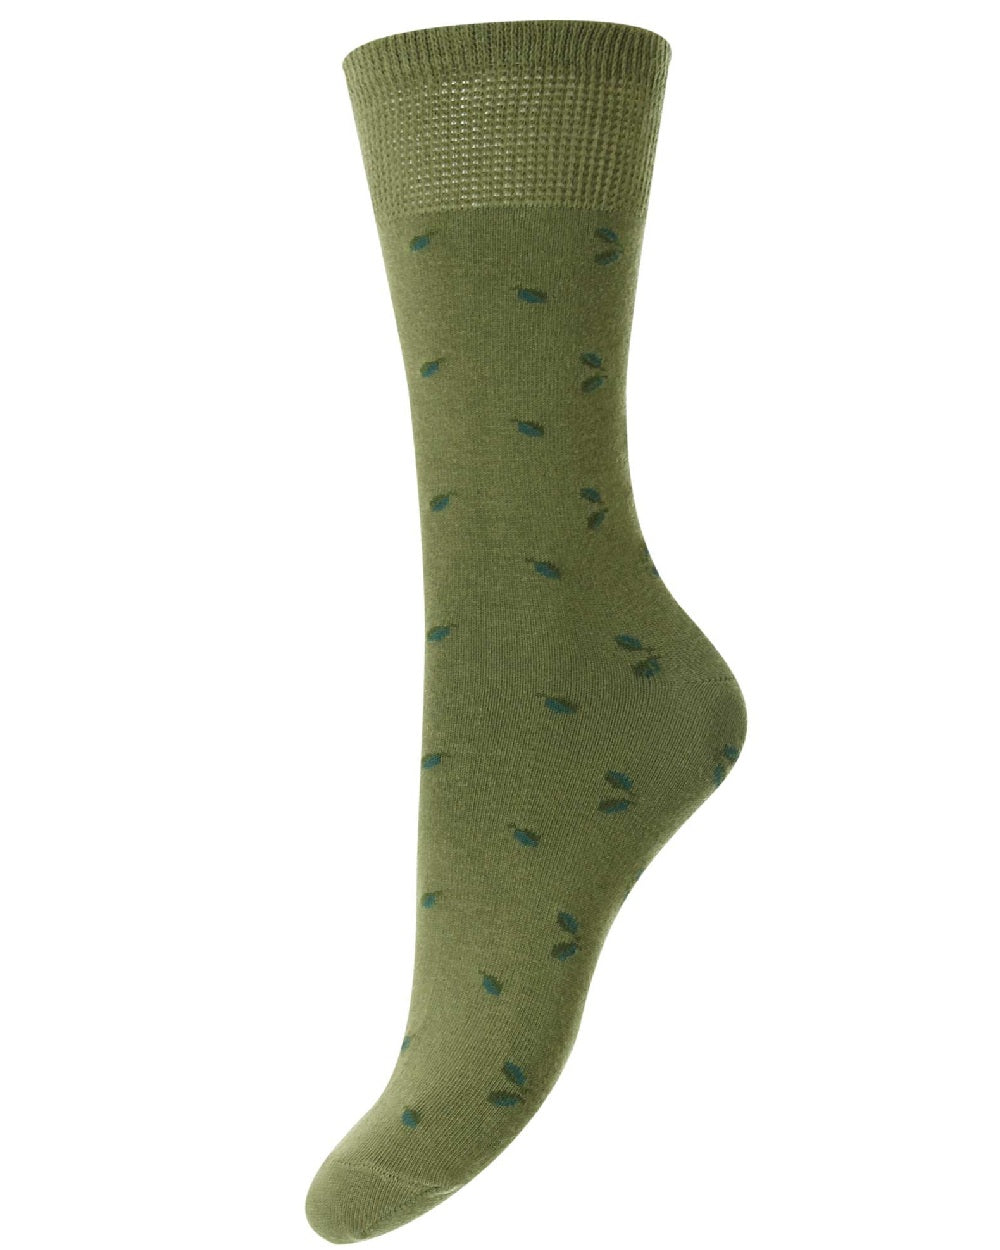 HJ Hall Leaf Cotton Comfort Top Socks in Khaki 